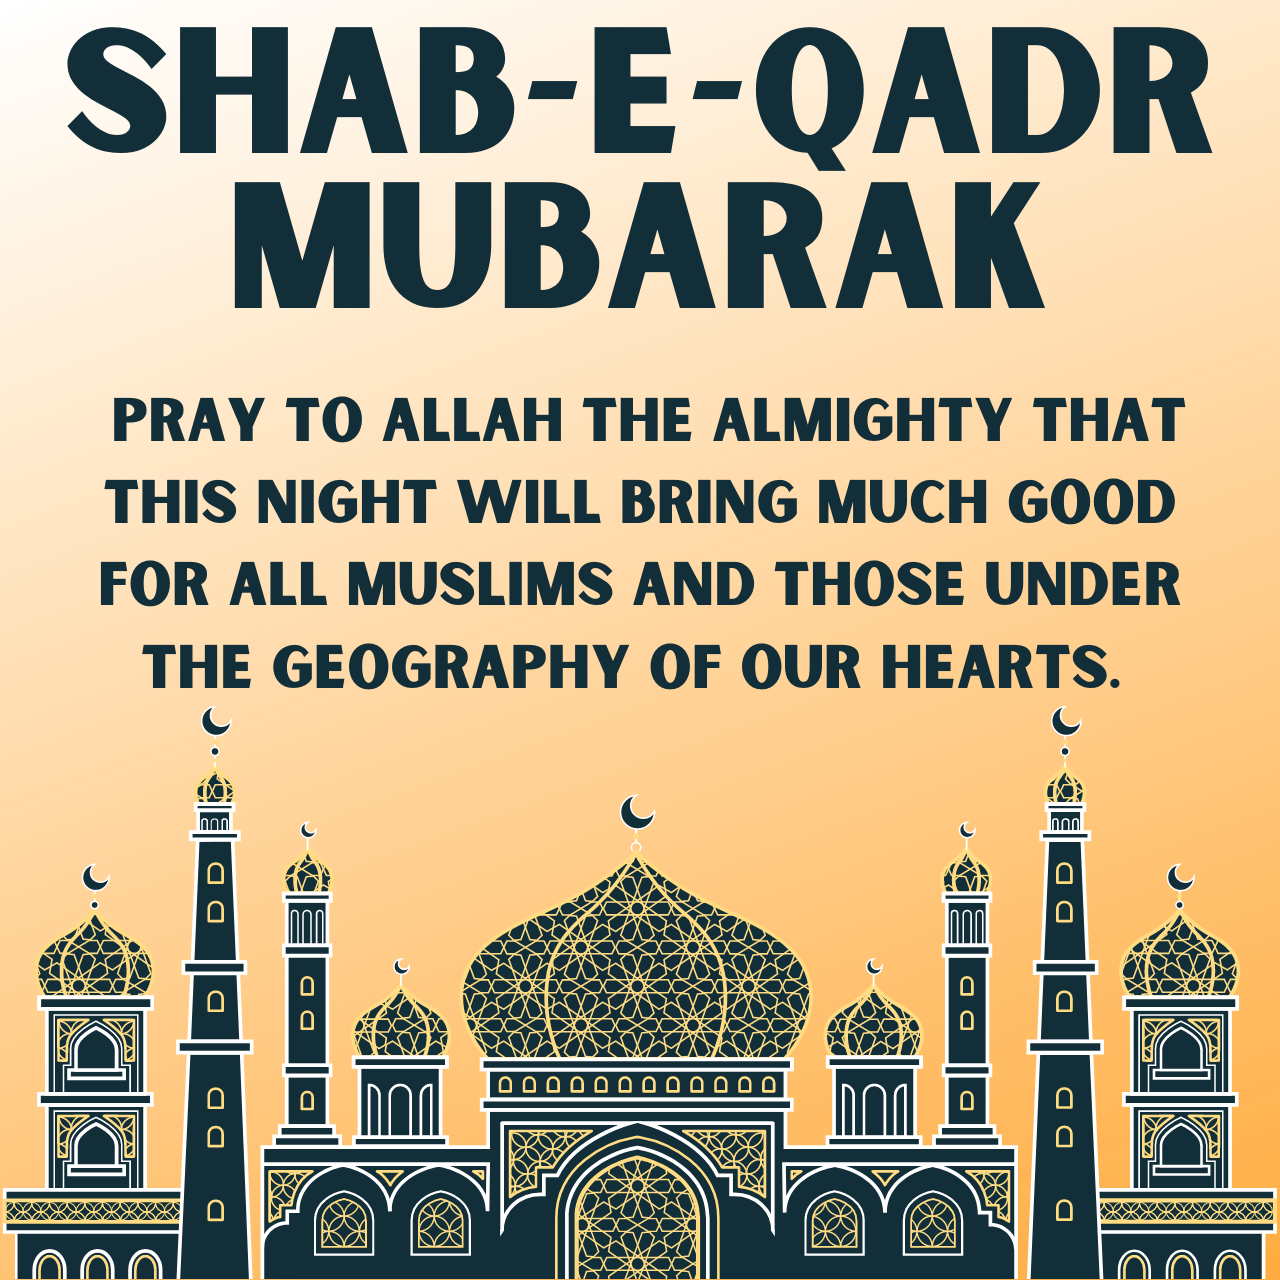 Ramadan 2021: Shab-e-Qadr Mubarak, Shayari, Quotes, WhatsApp Status, wishes, Images (photos), and Greetings to Share on Qard night